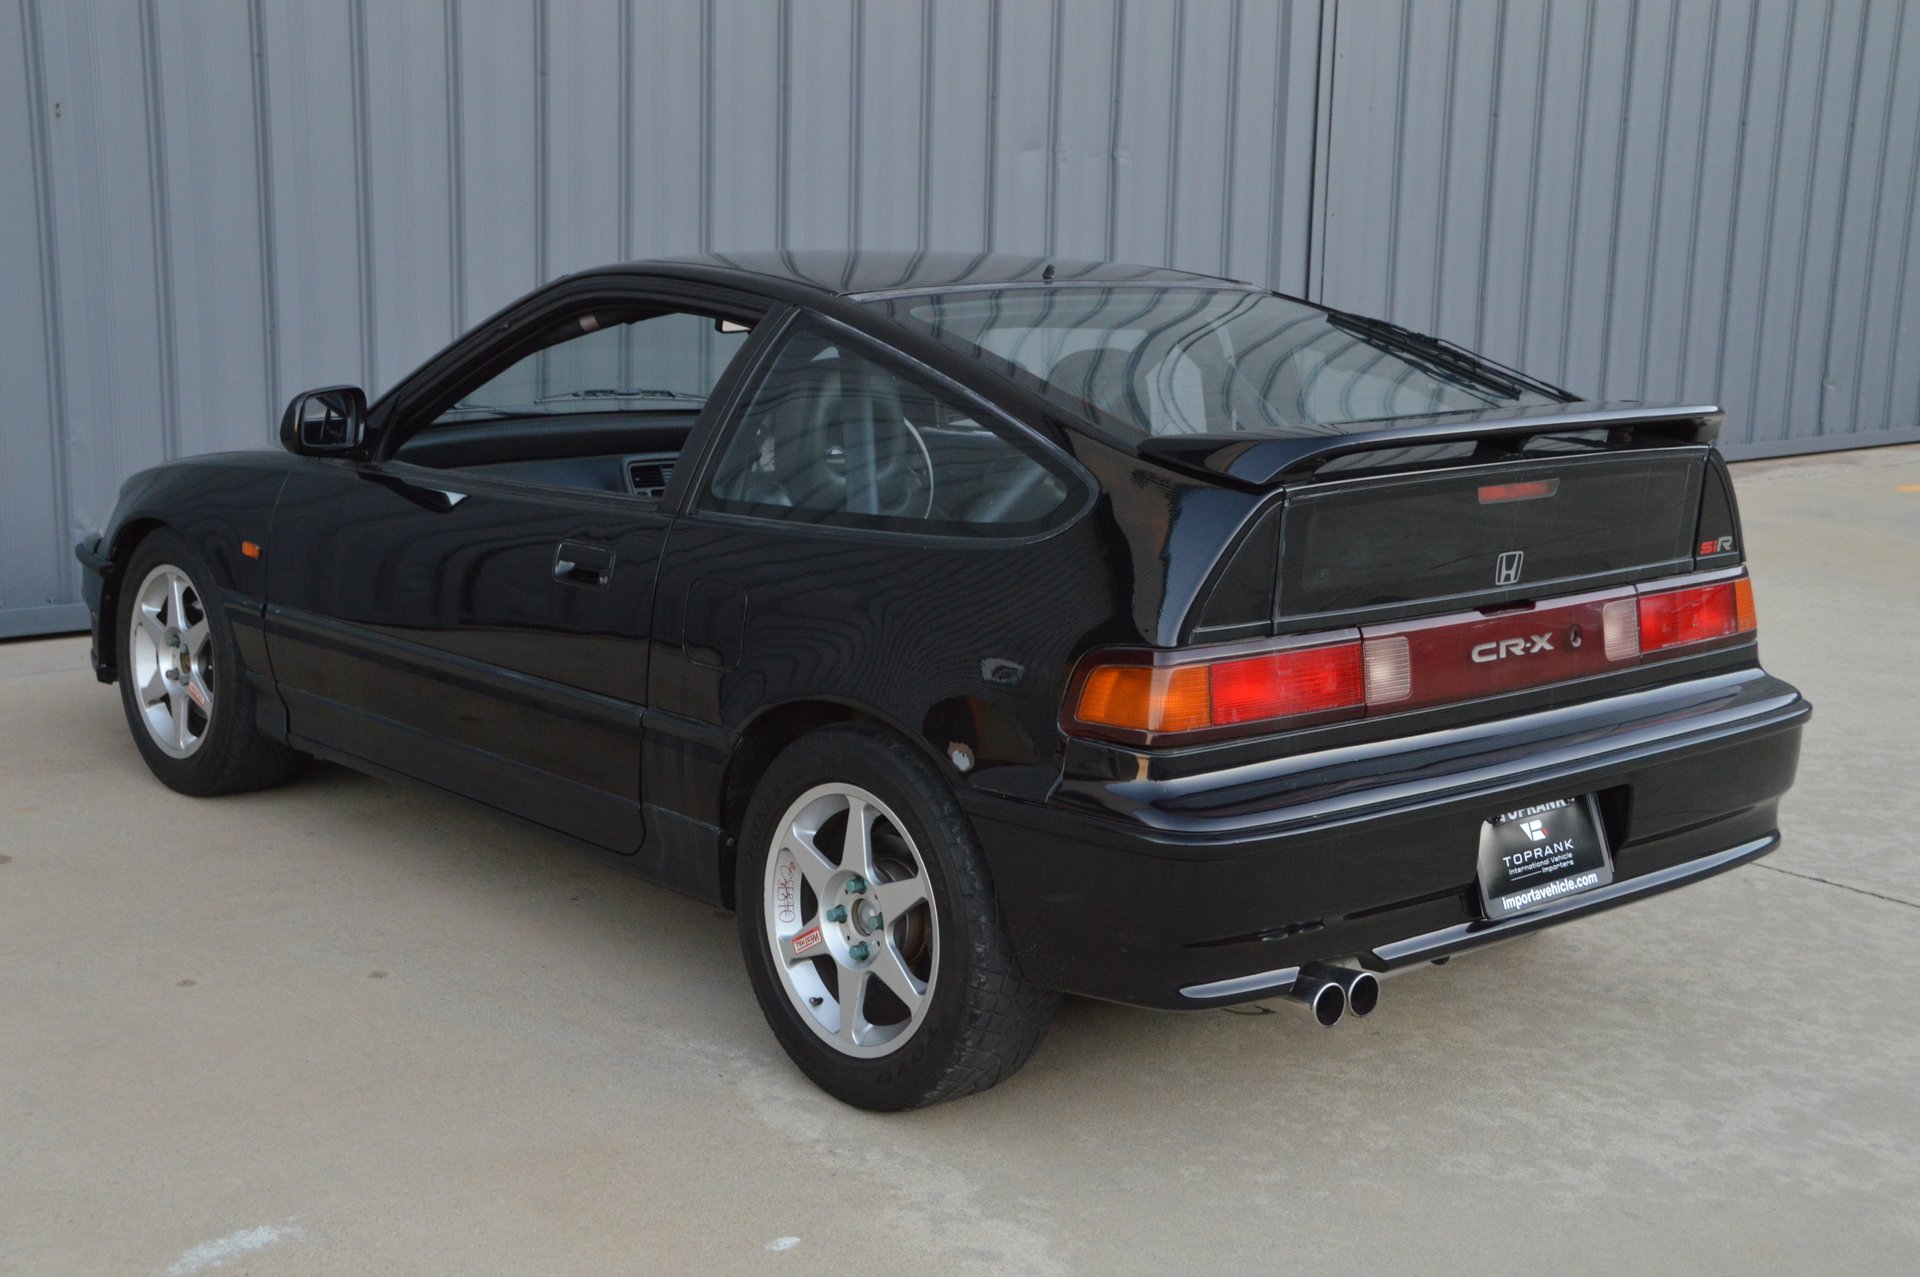 1991 Honda Crx Toprank Importers